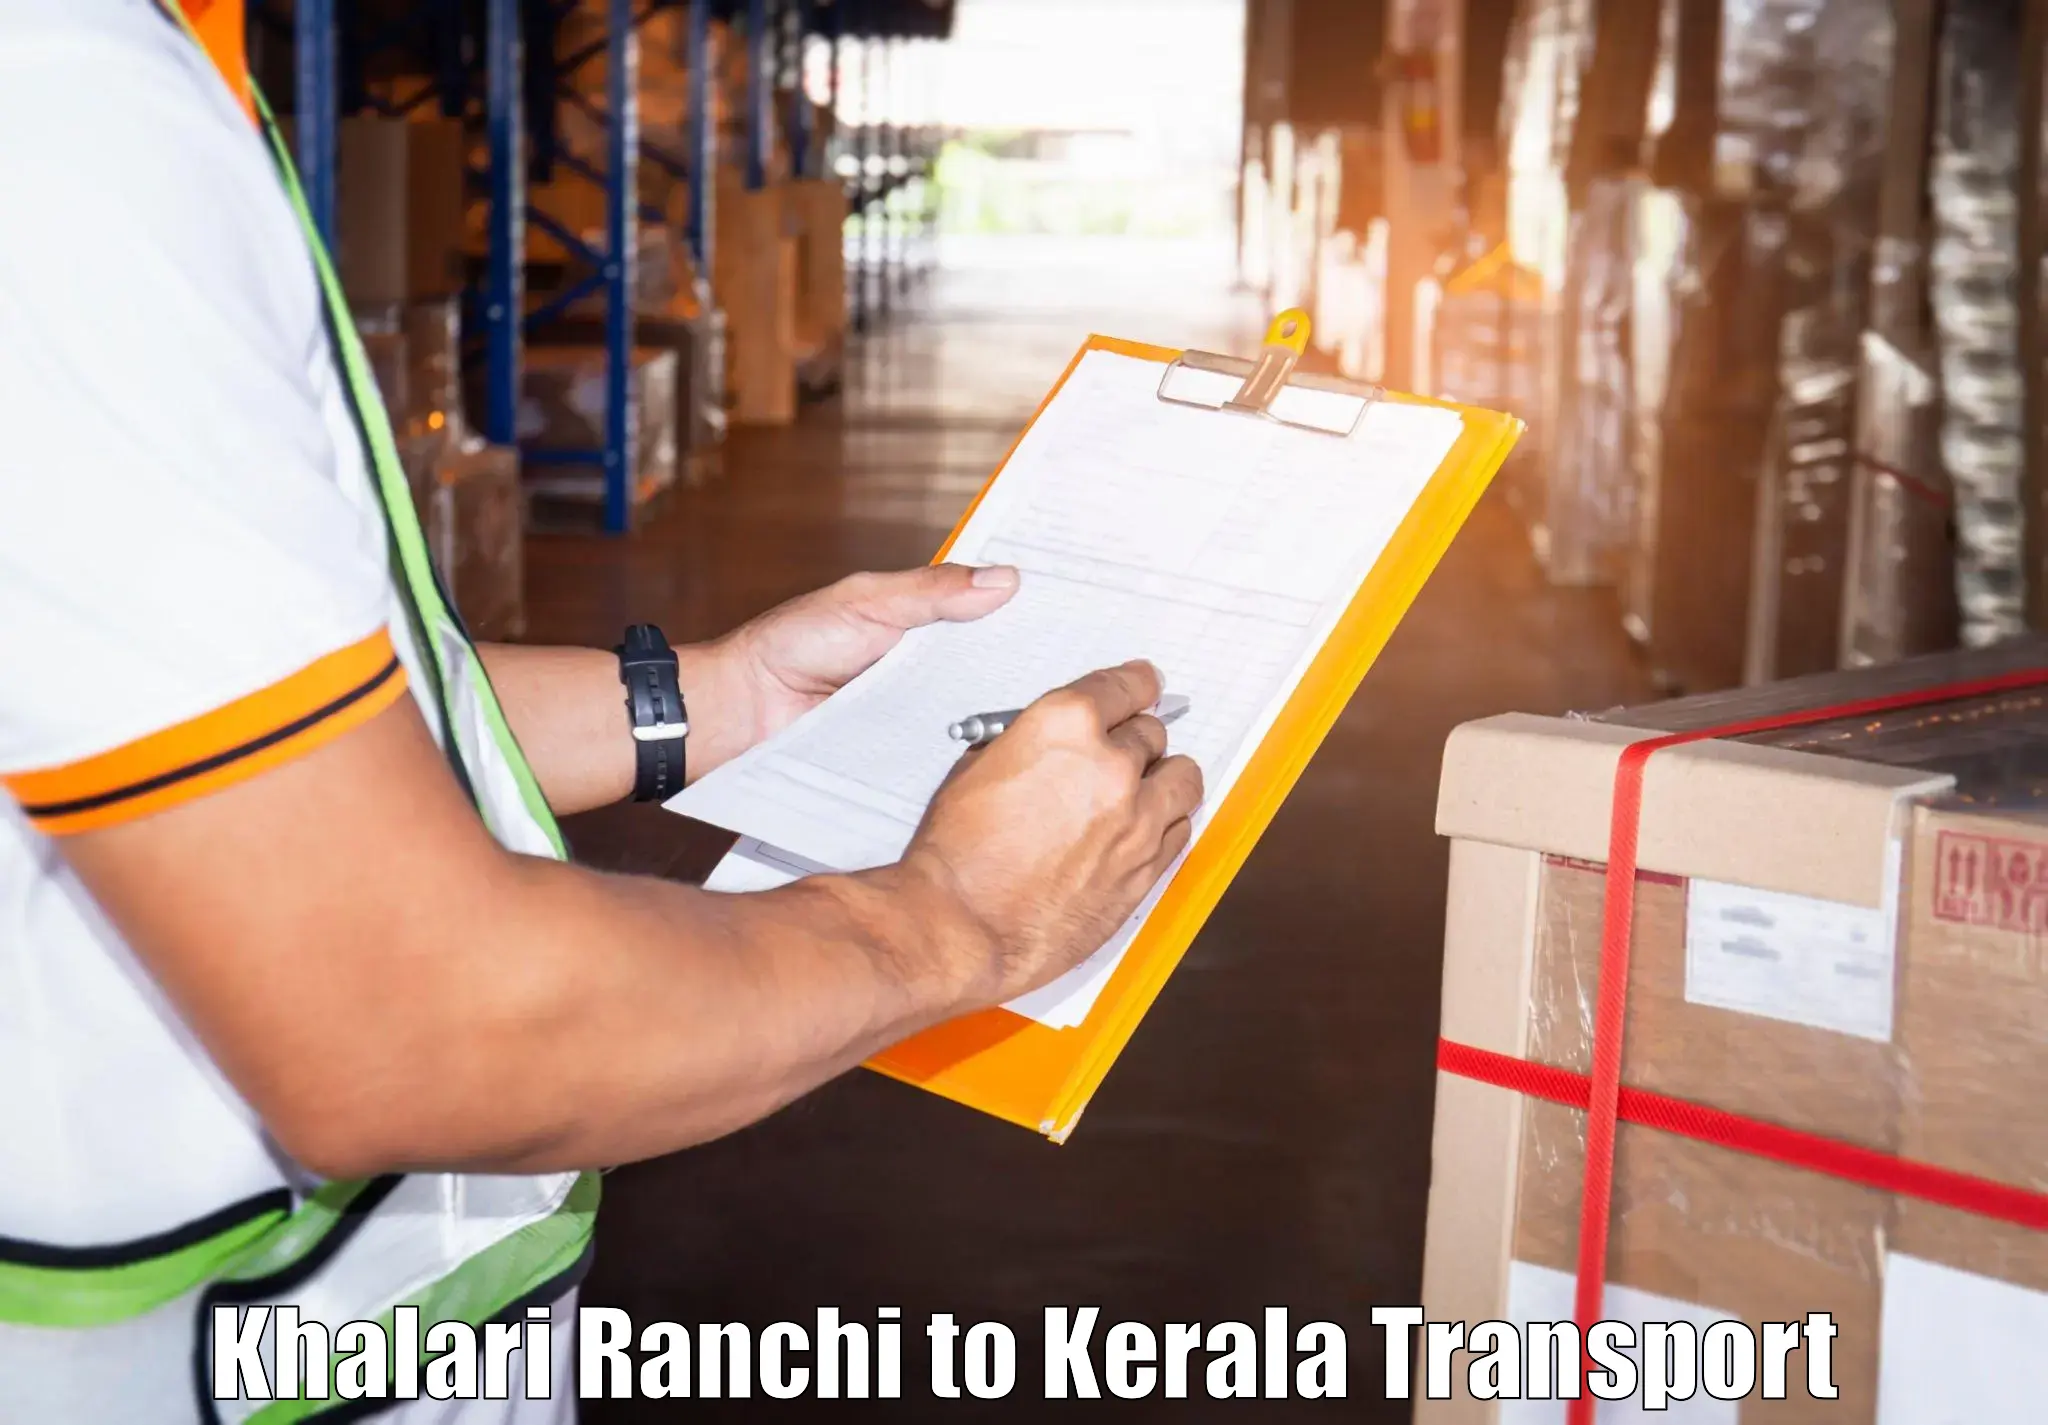 Lorry transport service Khalari Ranchi to Changanacherry